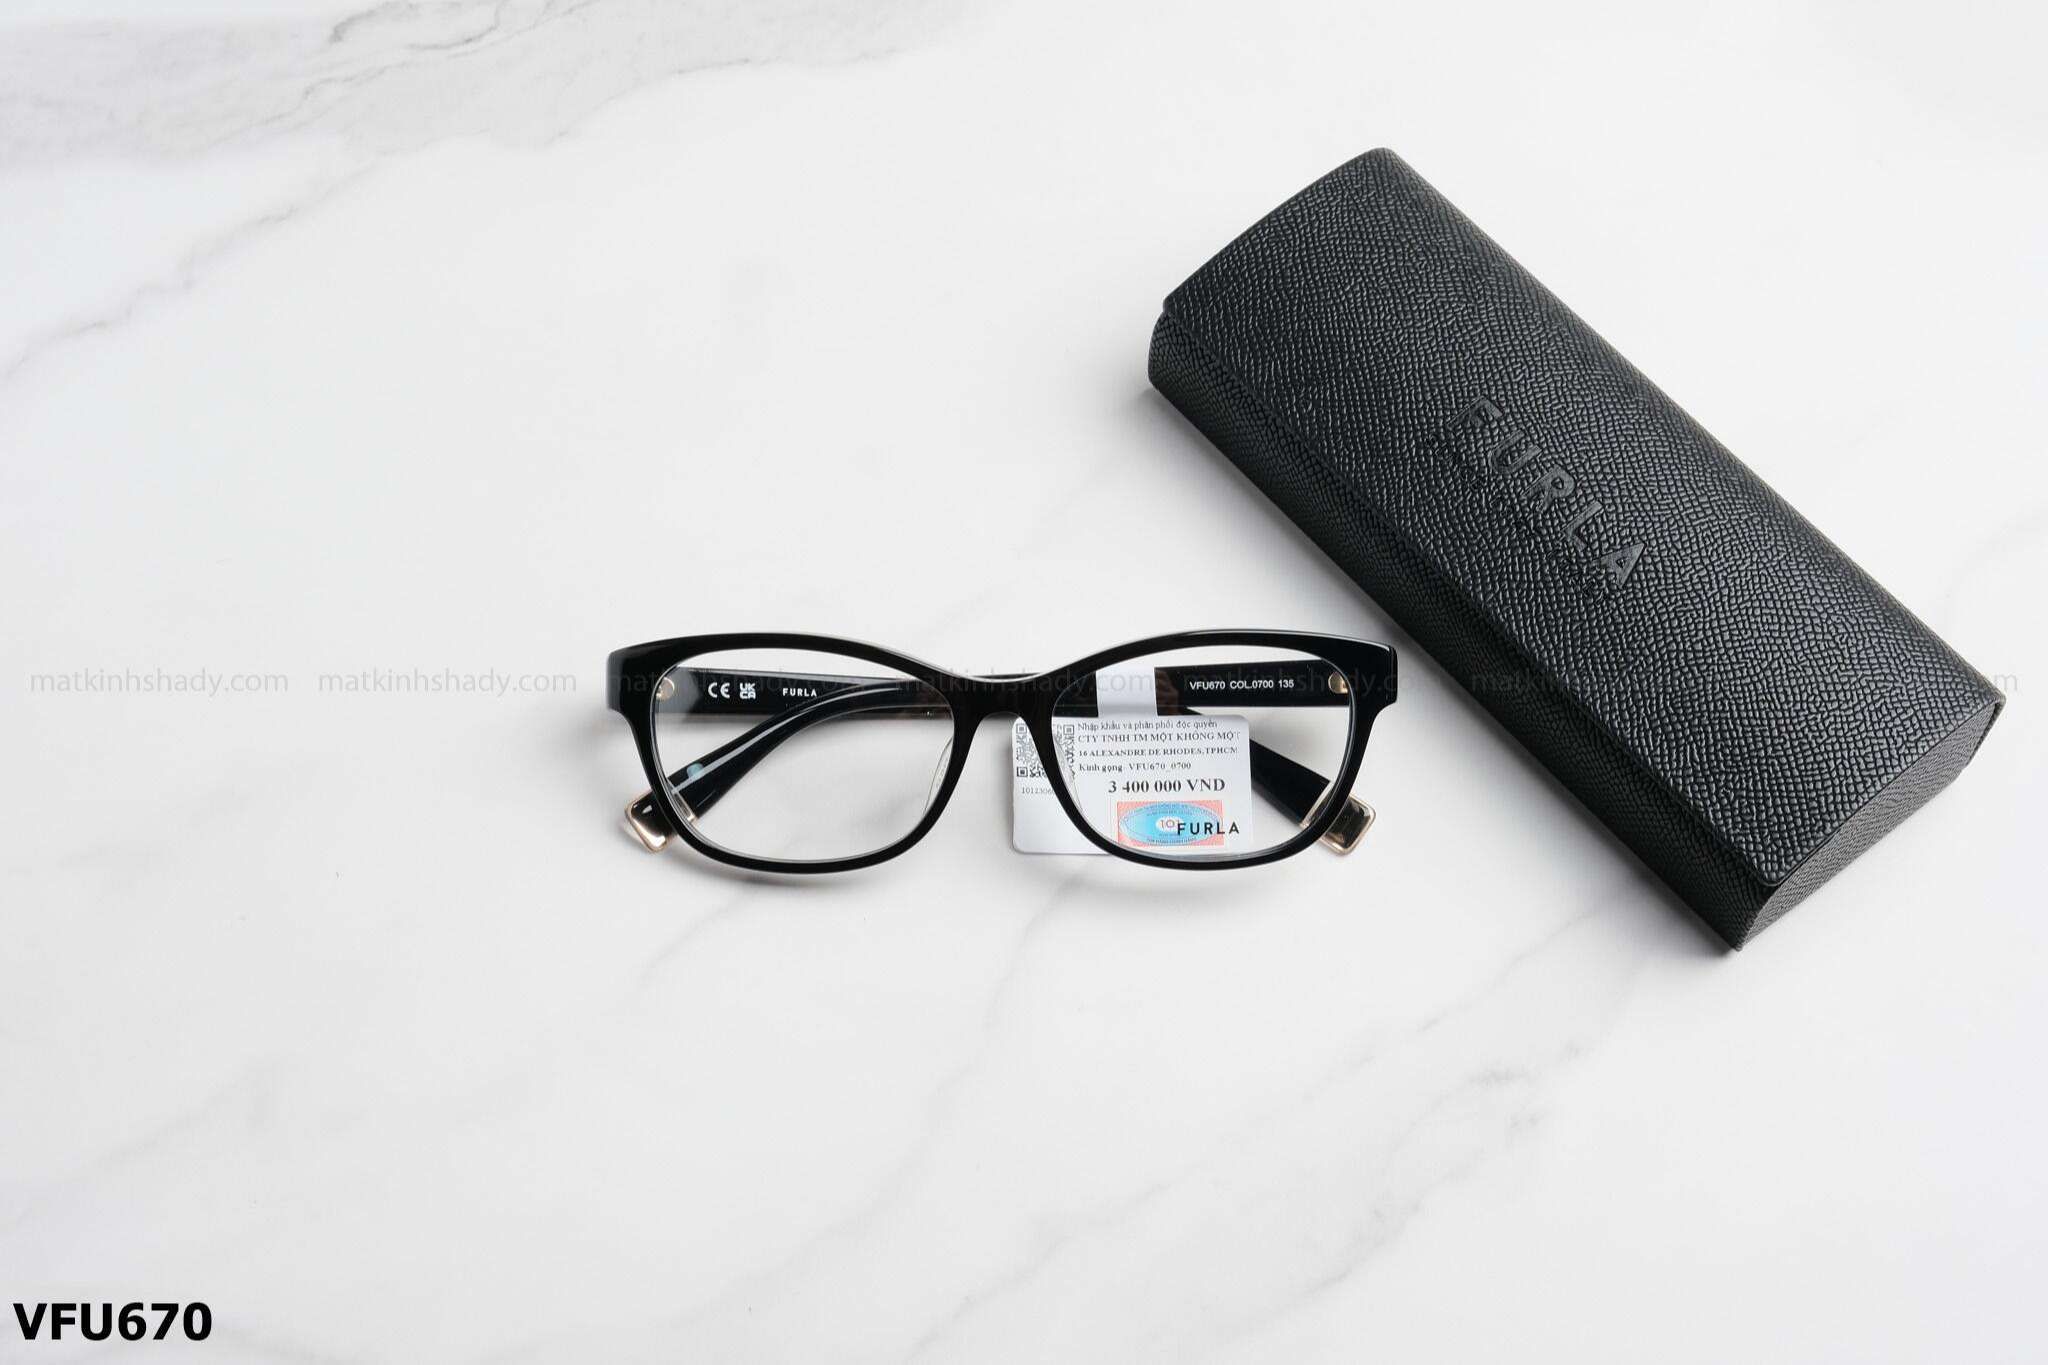  Furla Eyewear - Glasses - VFU670 